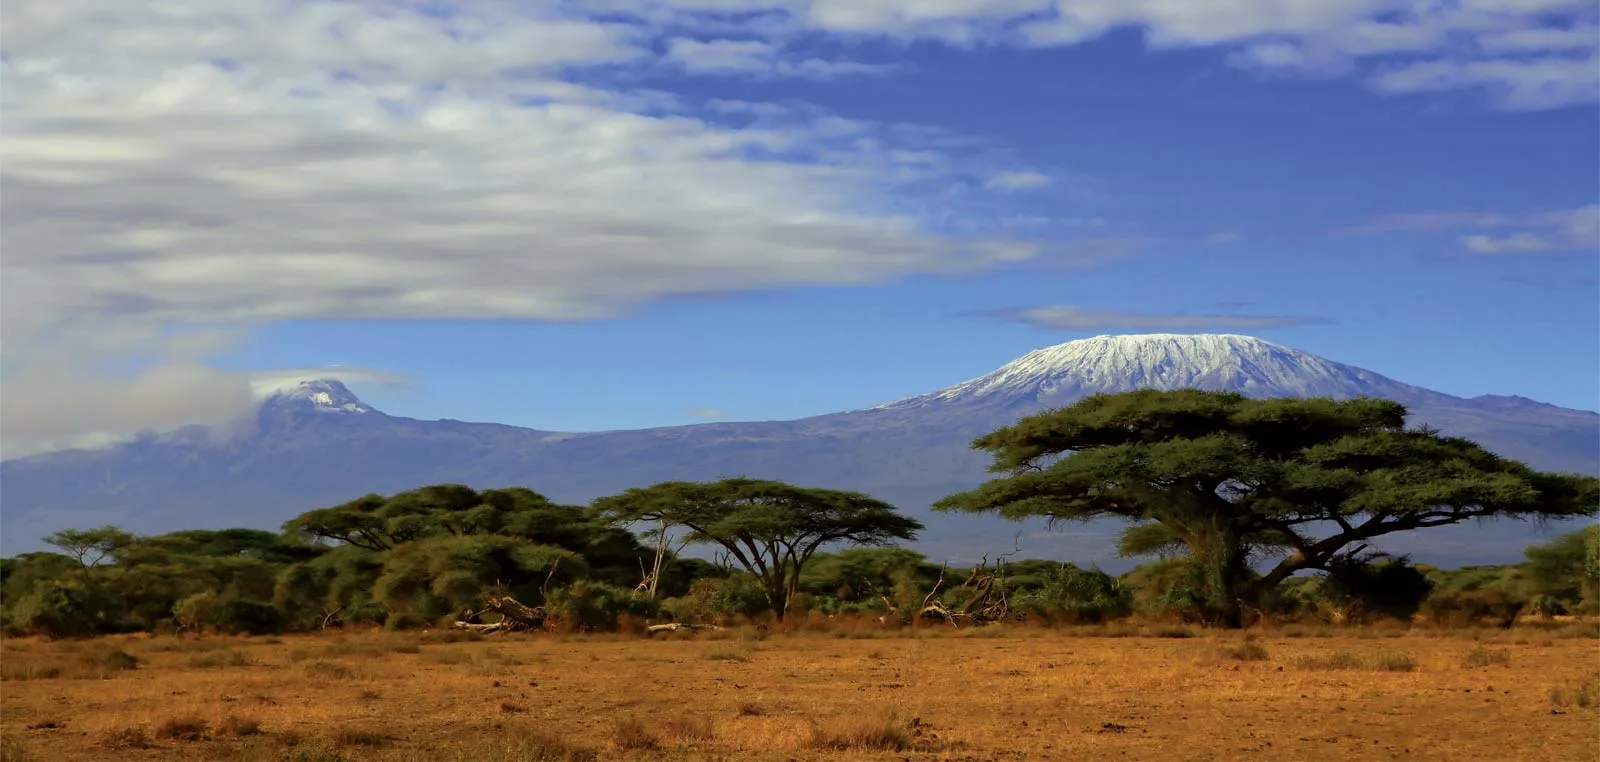 Mount Kilimanjaro, highest mountain in Africa